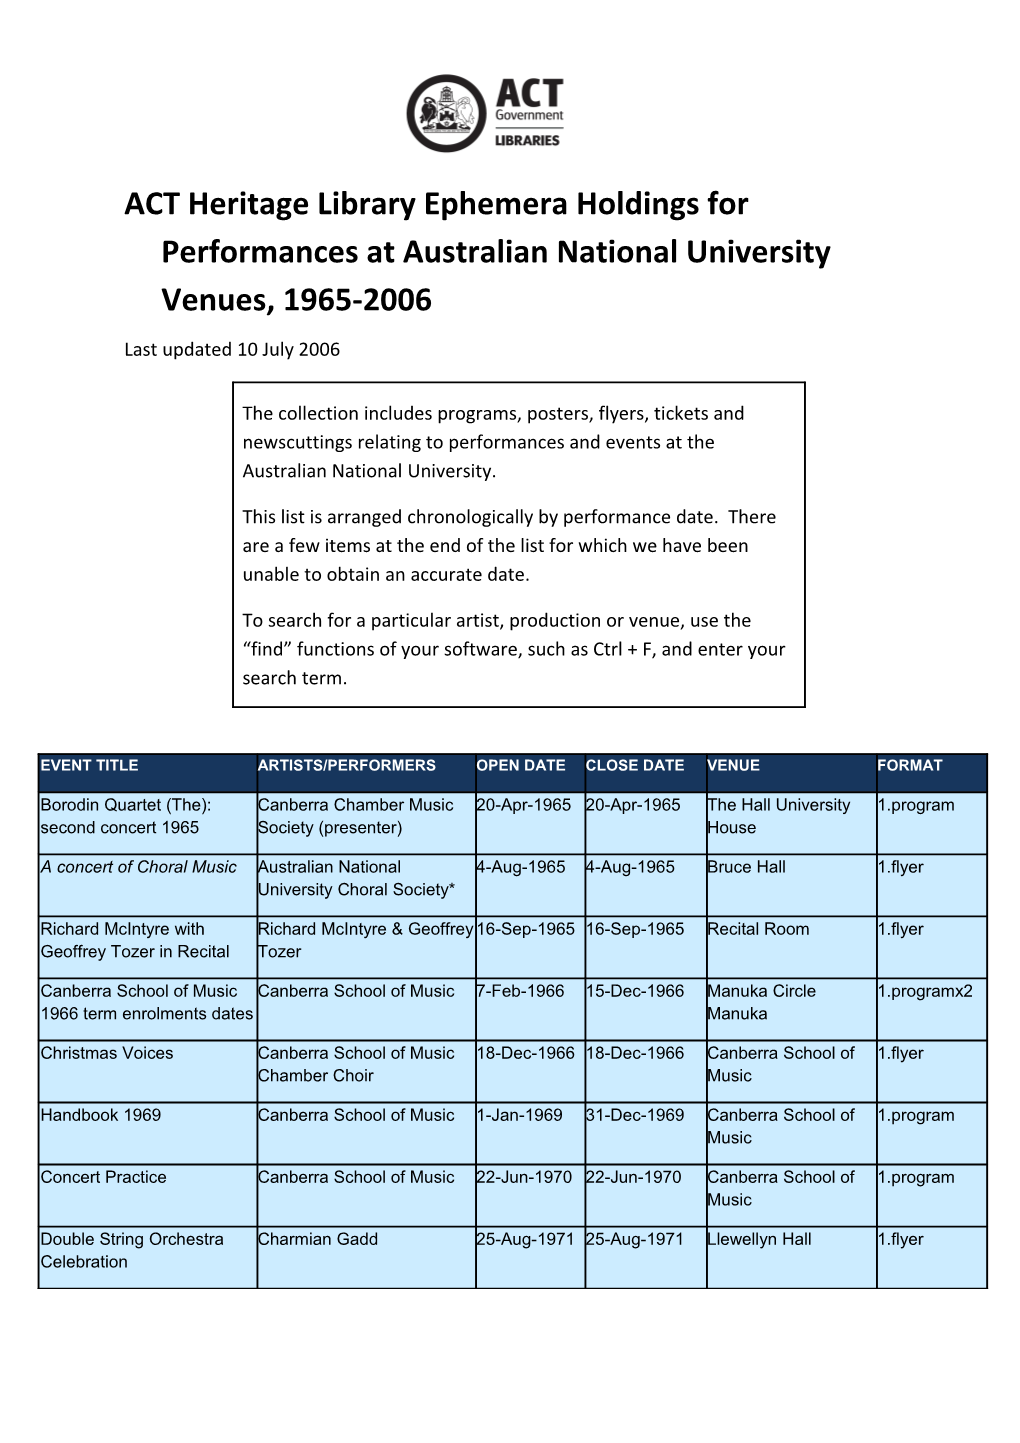 ACT Heritage Library Ephemera Holdings for Performances at Australian National University